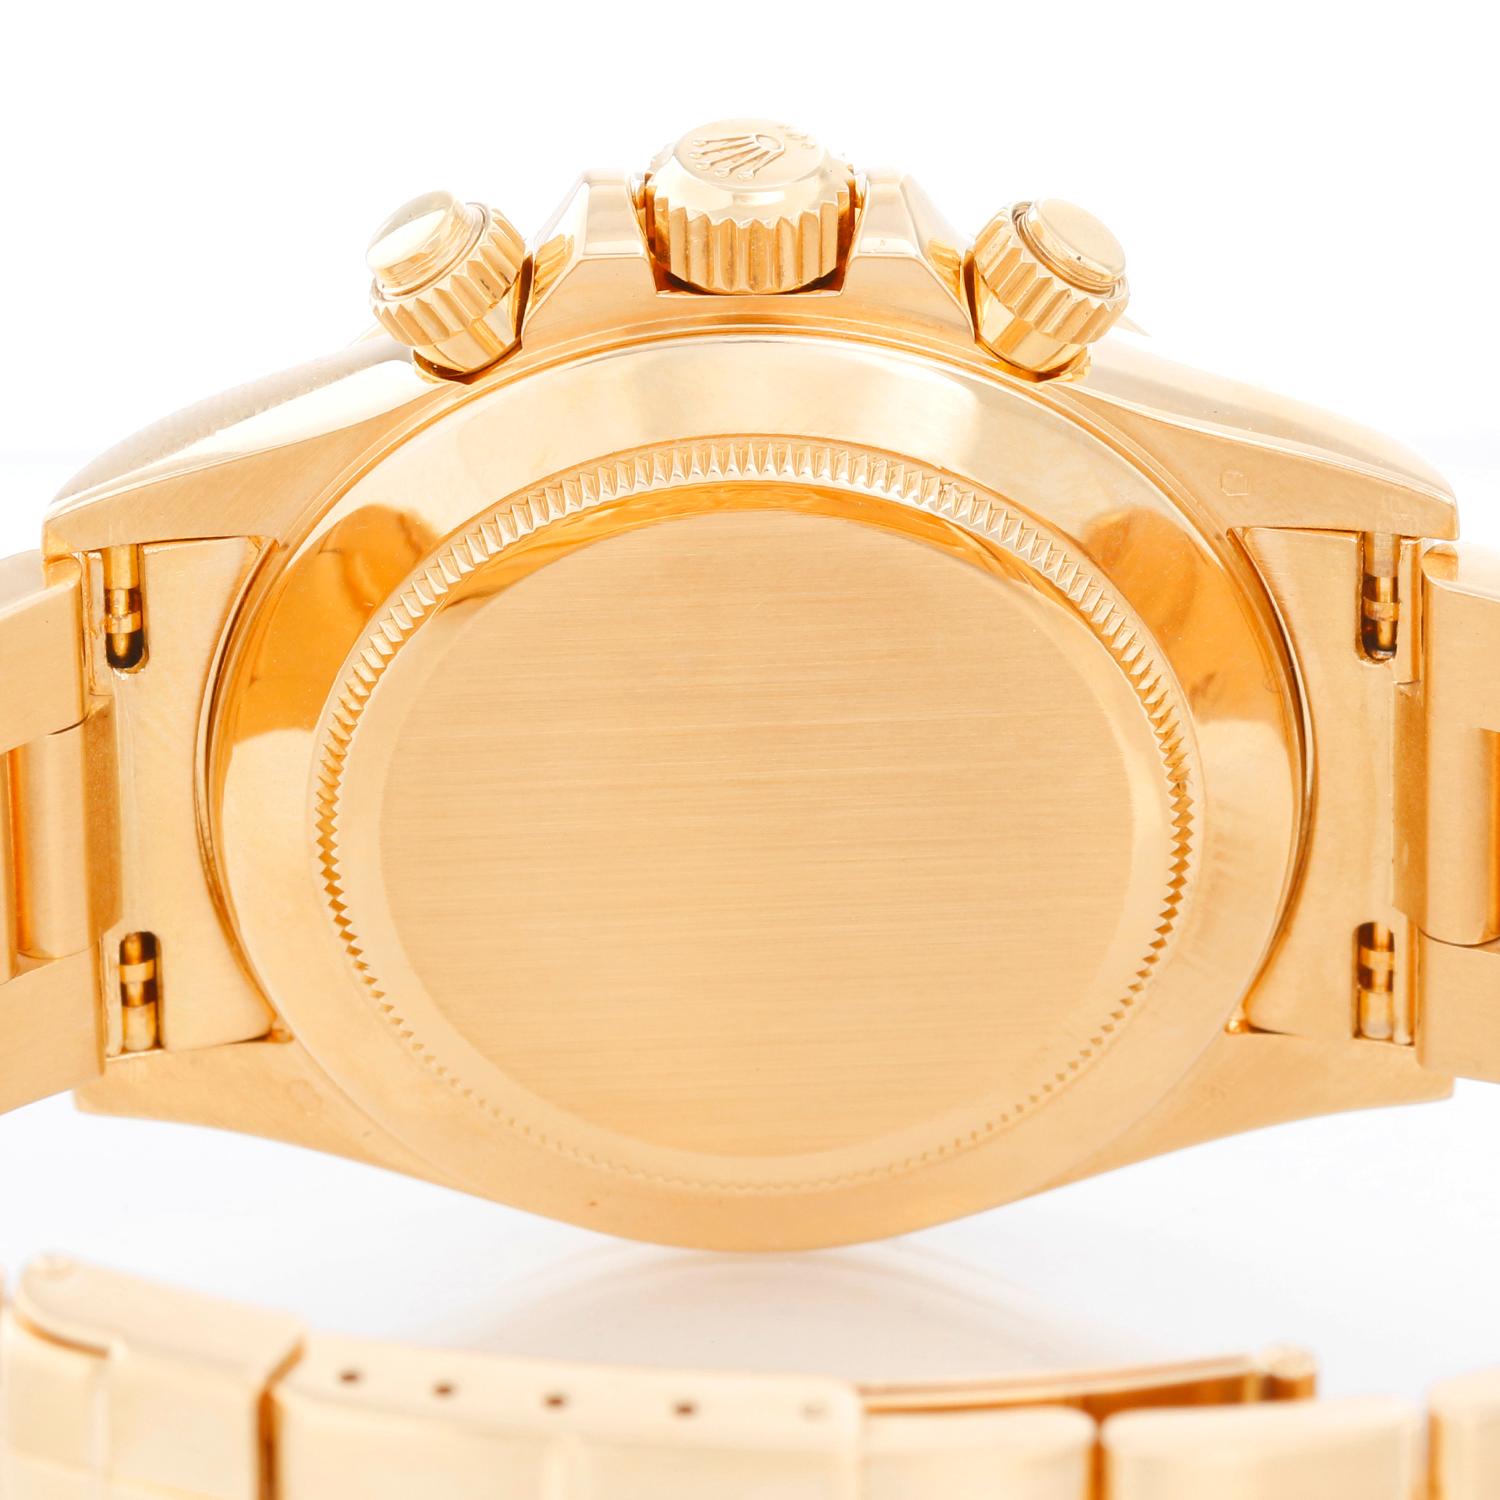 Rolex Cosmograph Zenith Daytona Men's 18k Gold Watch 16528 1